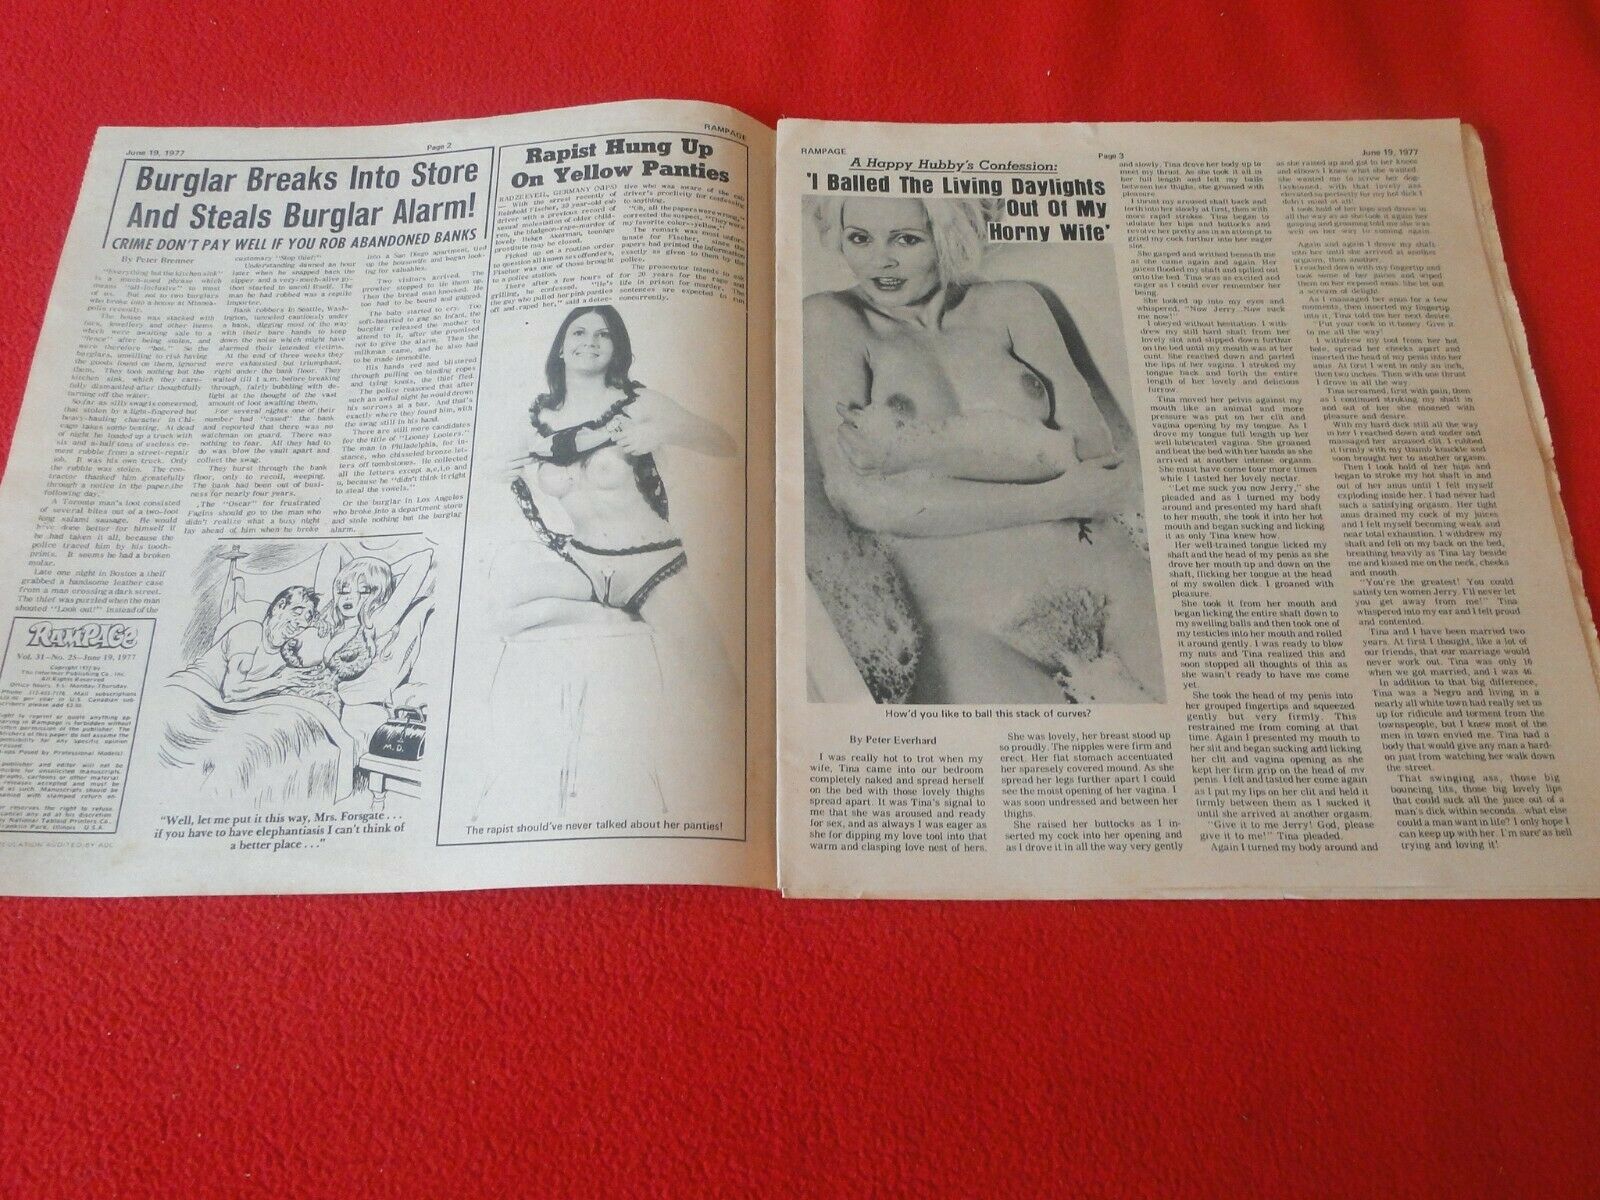 Vintage Classic Adult XXX Porn Newspaper/Magazine Rampage June 1977 â€“  Ephemera Galore